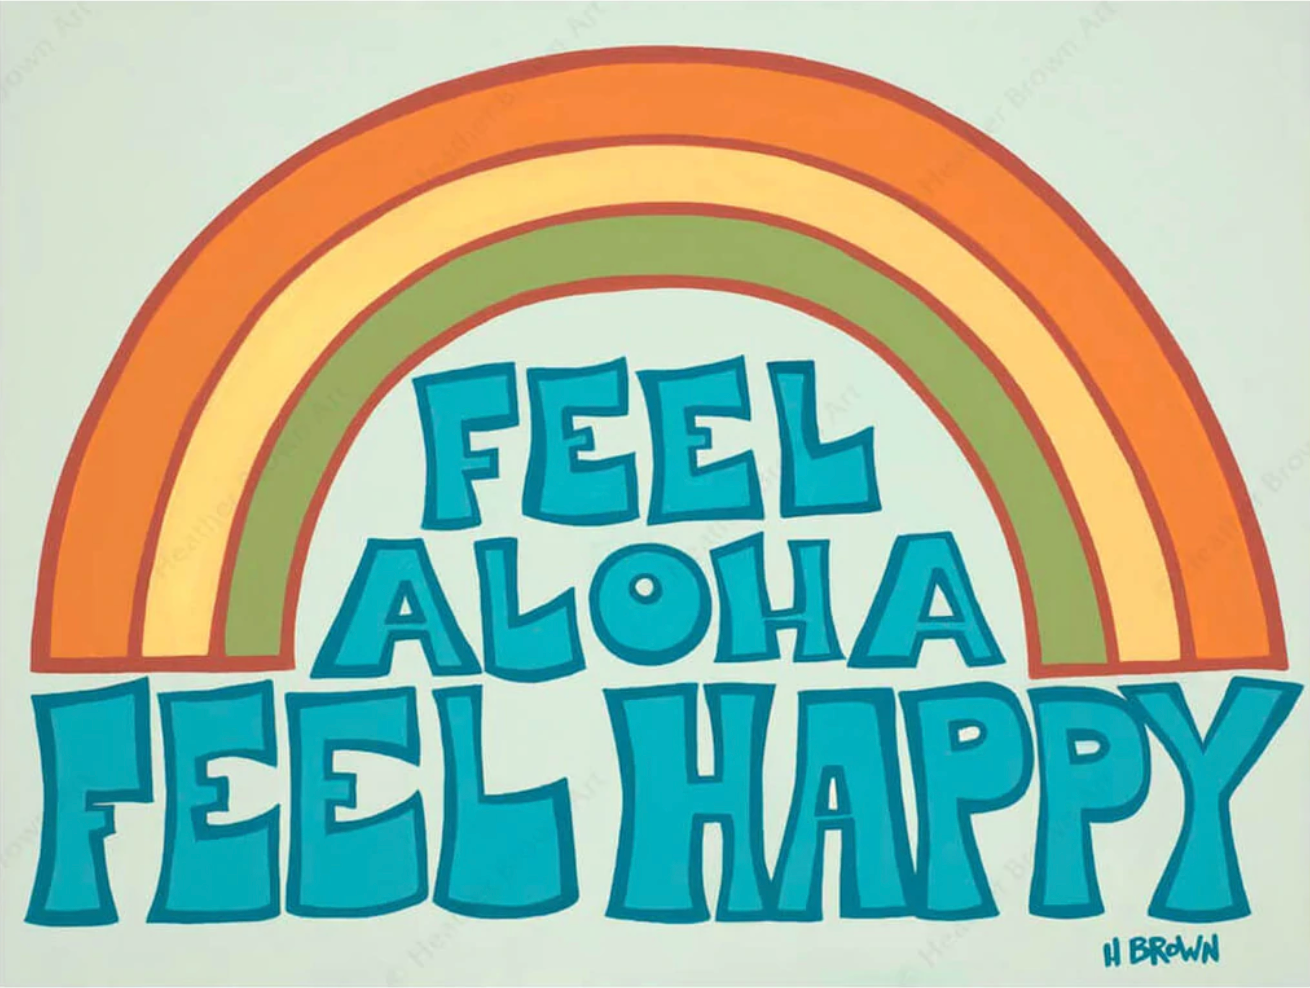 Feel Aloha Feel Happy